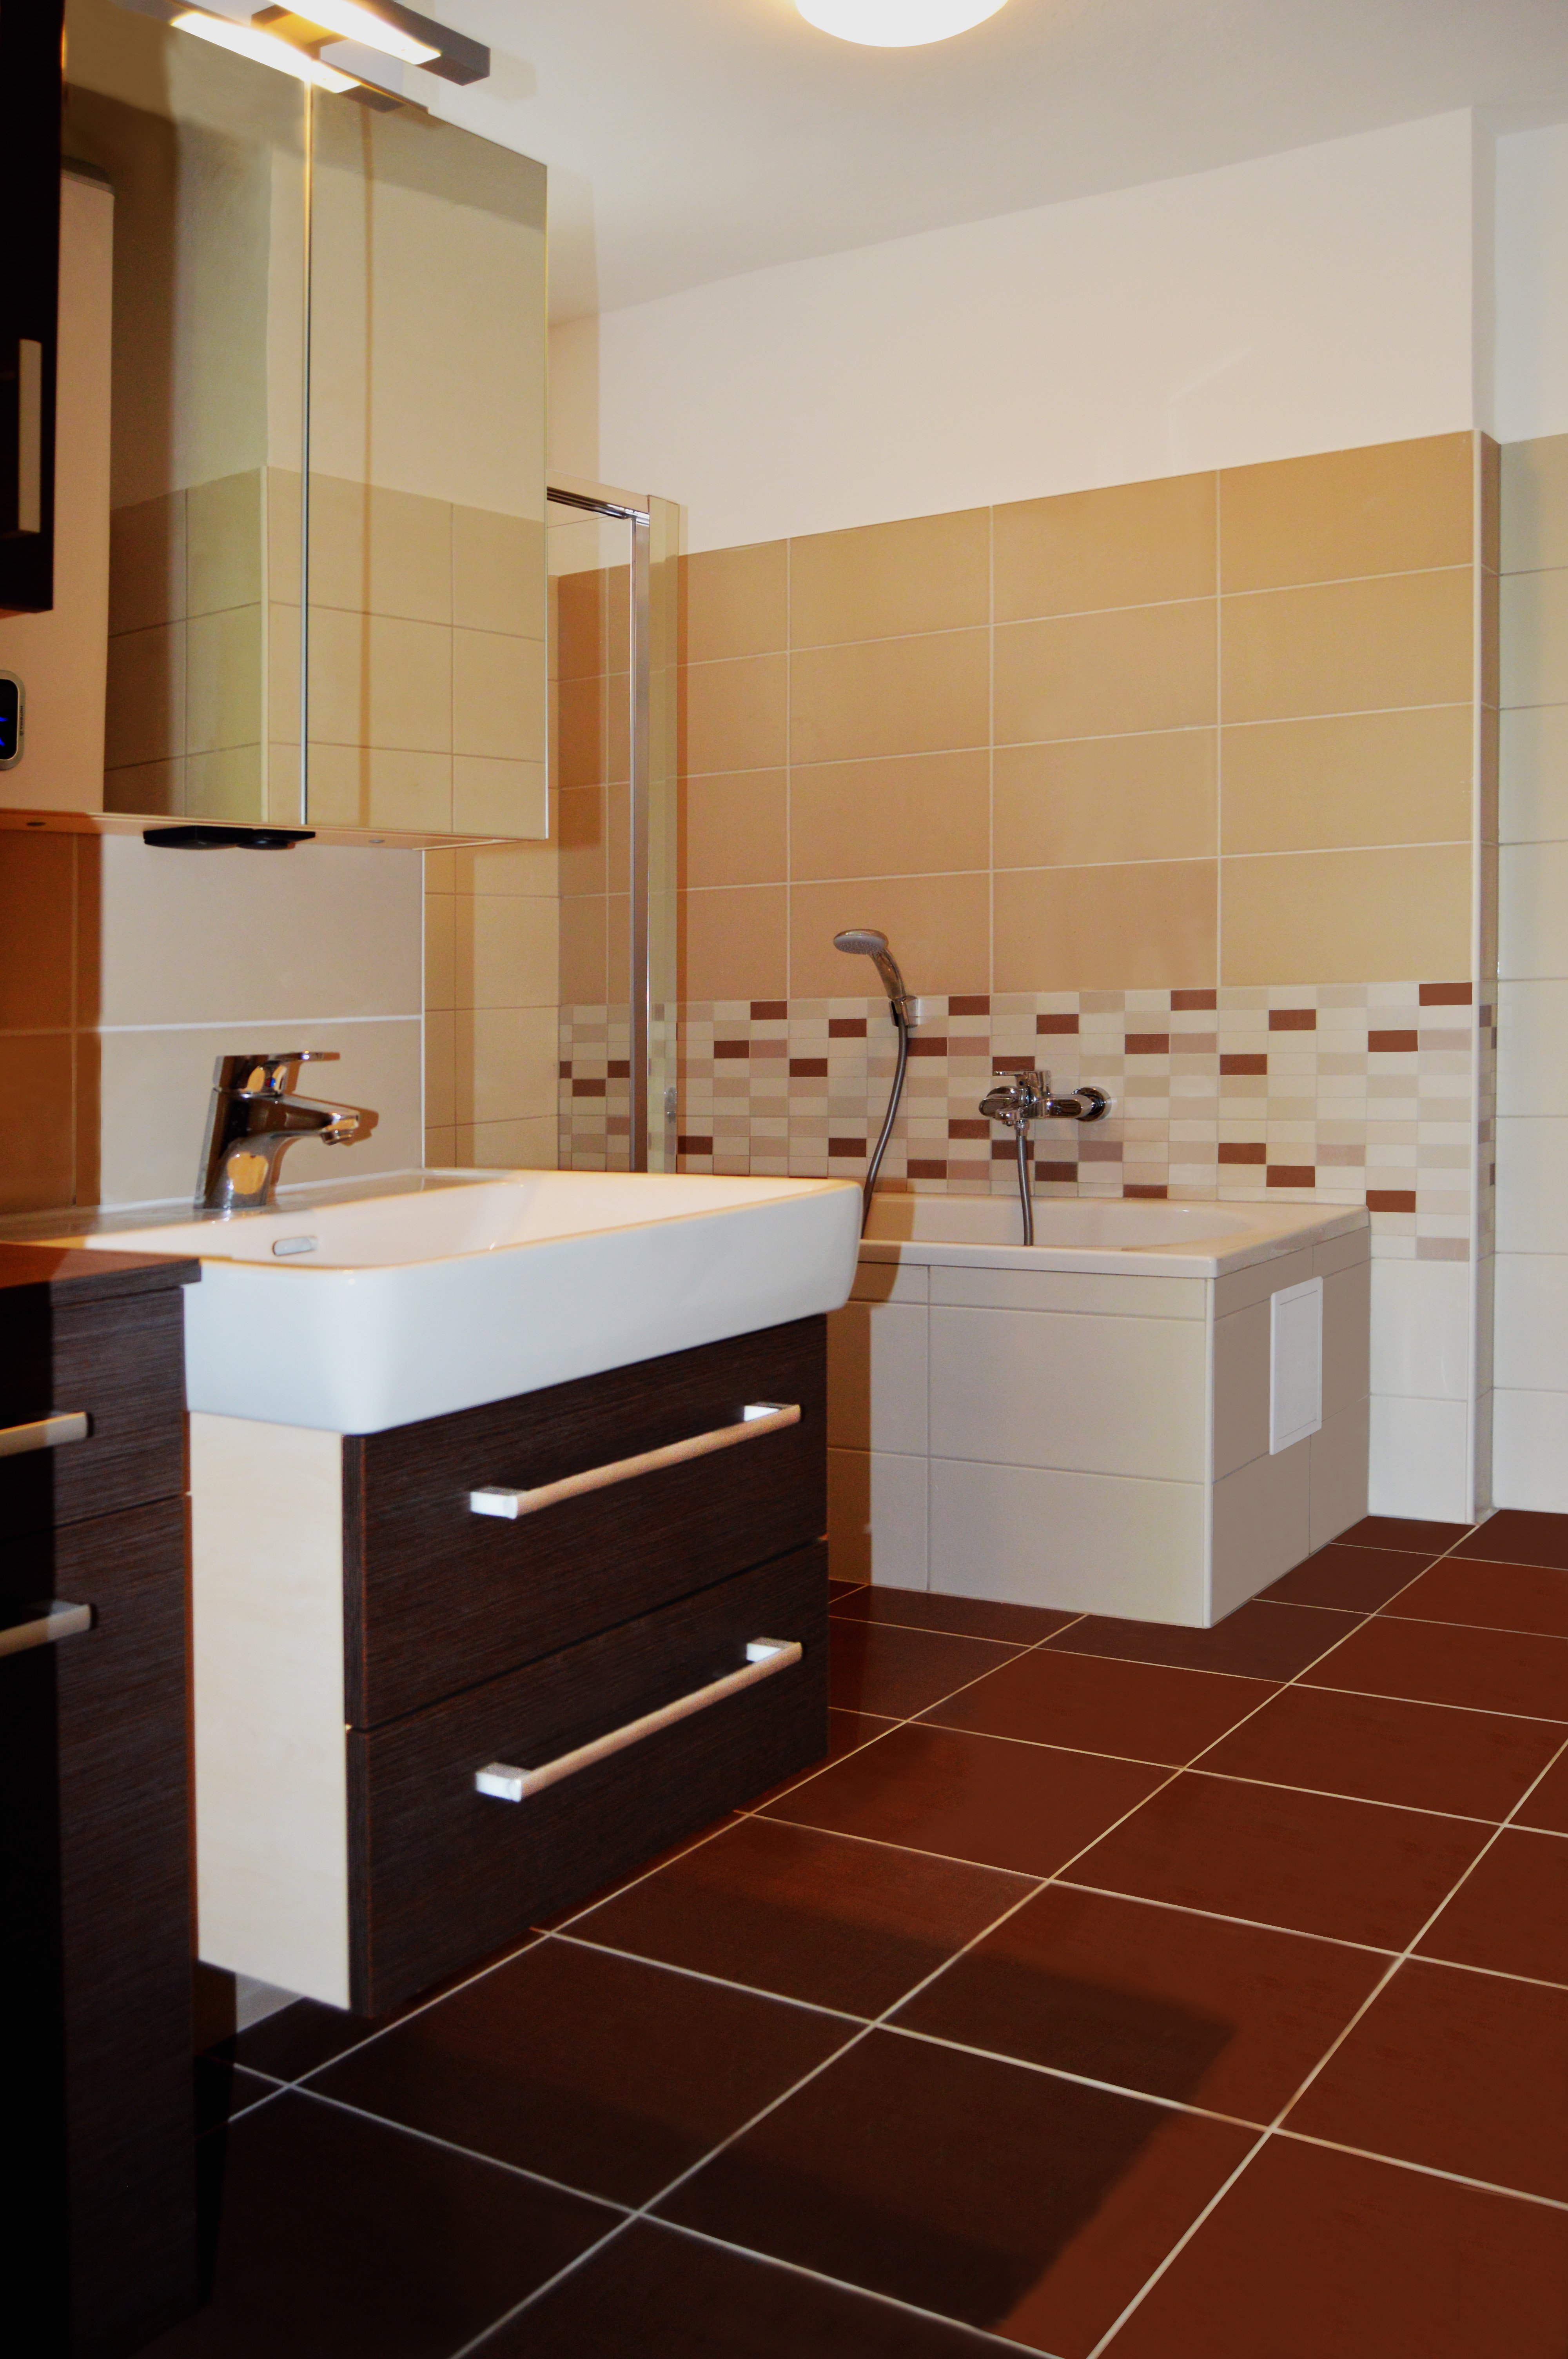 Rekonstrukce koupelny v rodinném domě - obklady Los Kachlos Cromatic - dlažba Basic 33x33 Cafe, obklad Blanco, Beige 25x40 a mozaika Mosaico 25x40 Blanco | Koupelny-svitavy.cz